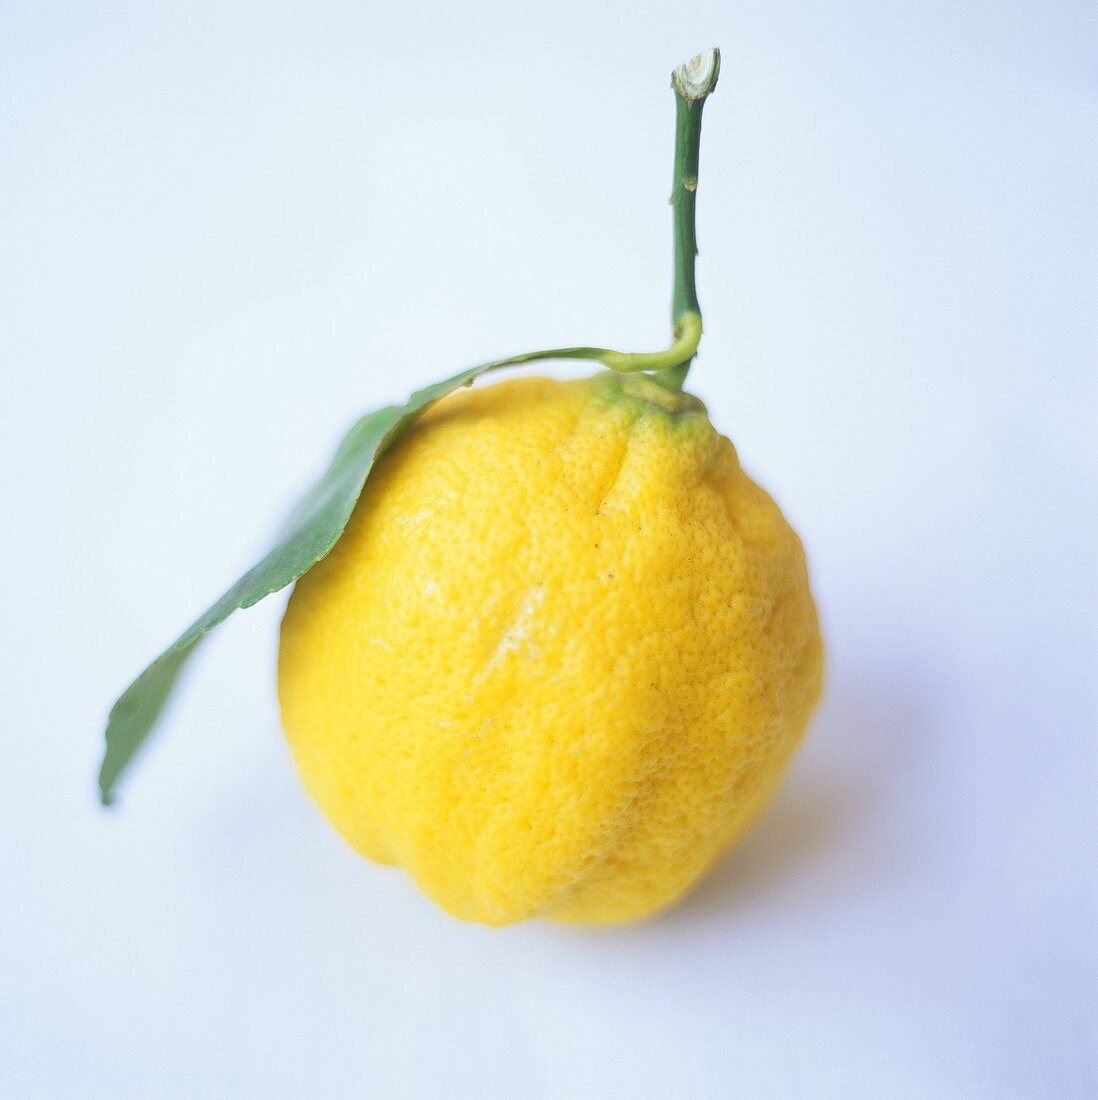 Lemon with stalk and leaf